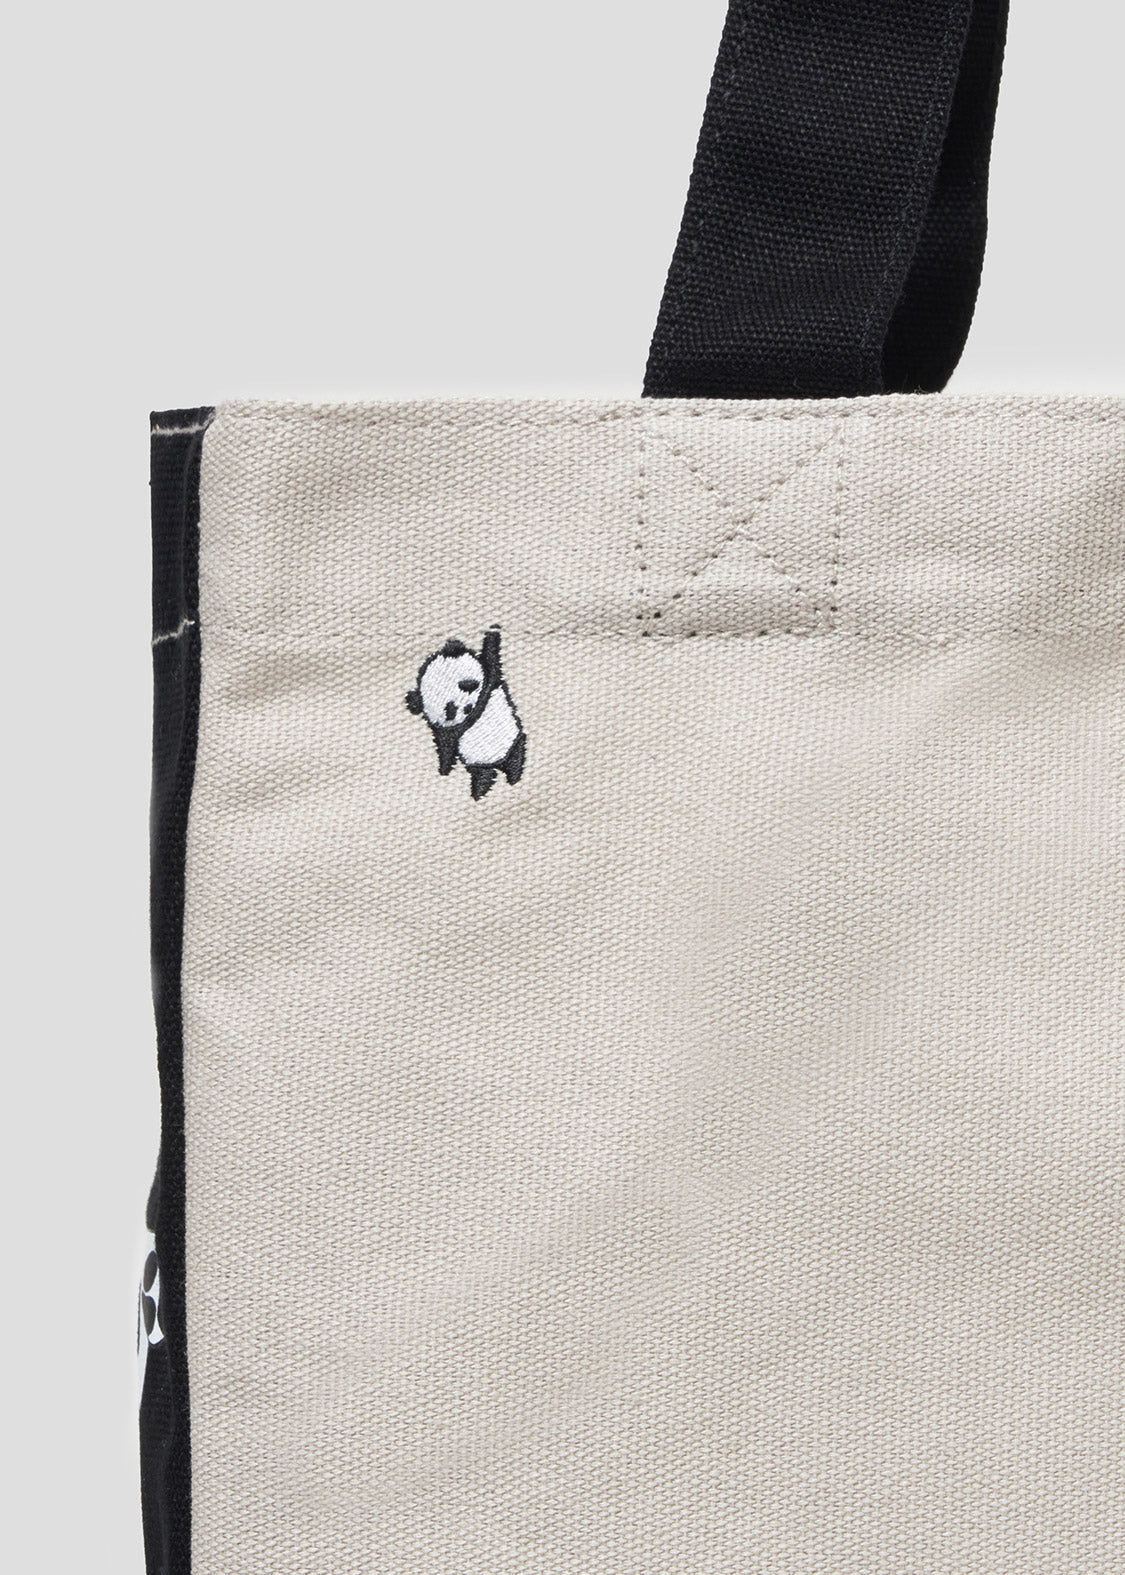 Square Tote Bag S (Rolling Pandas)